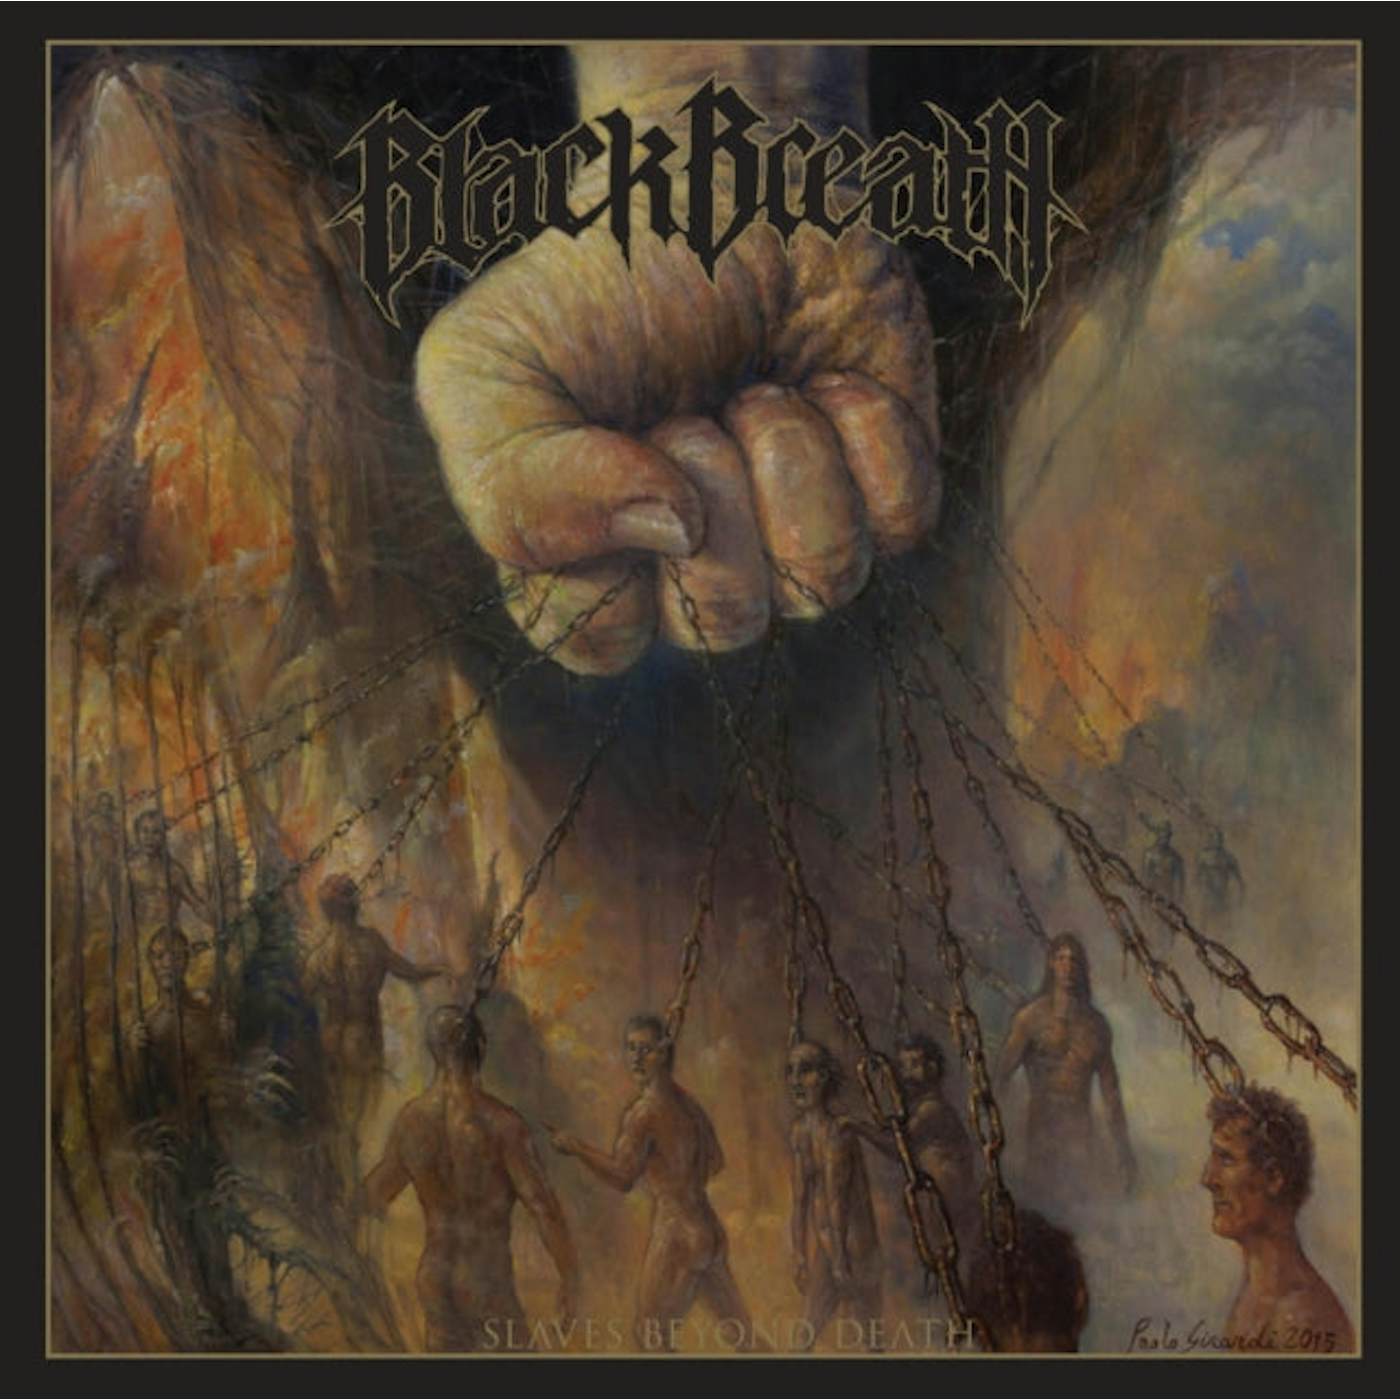 Black Breath LP - Slaves Beyond Death (Vinyl)